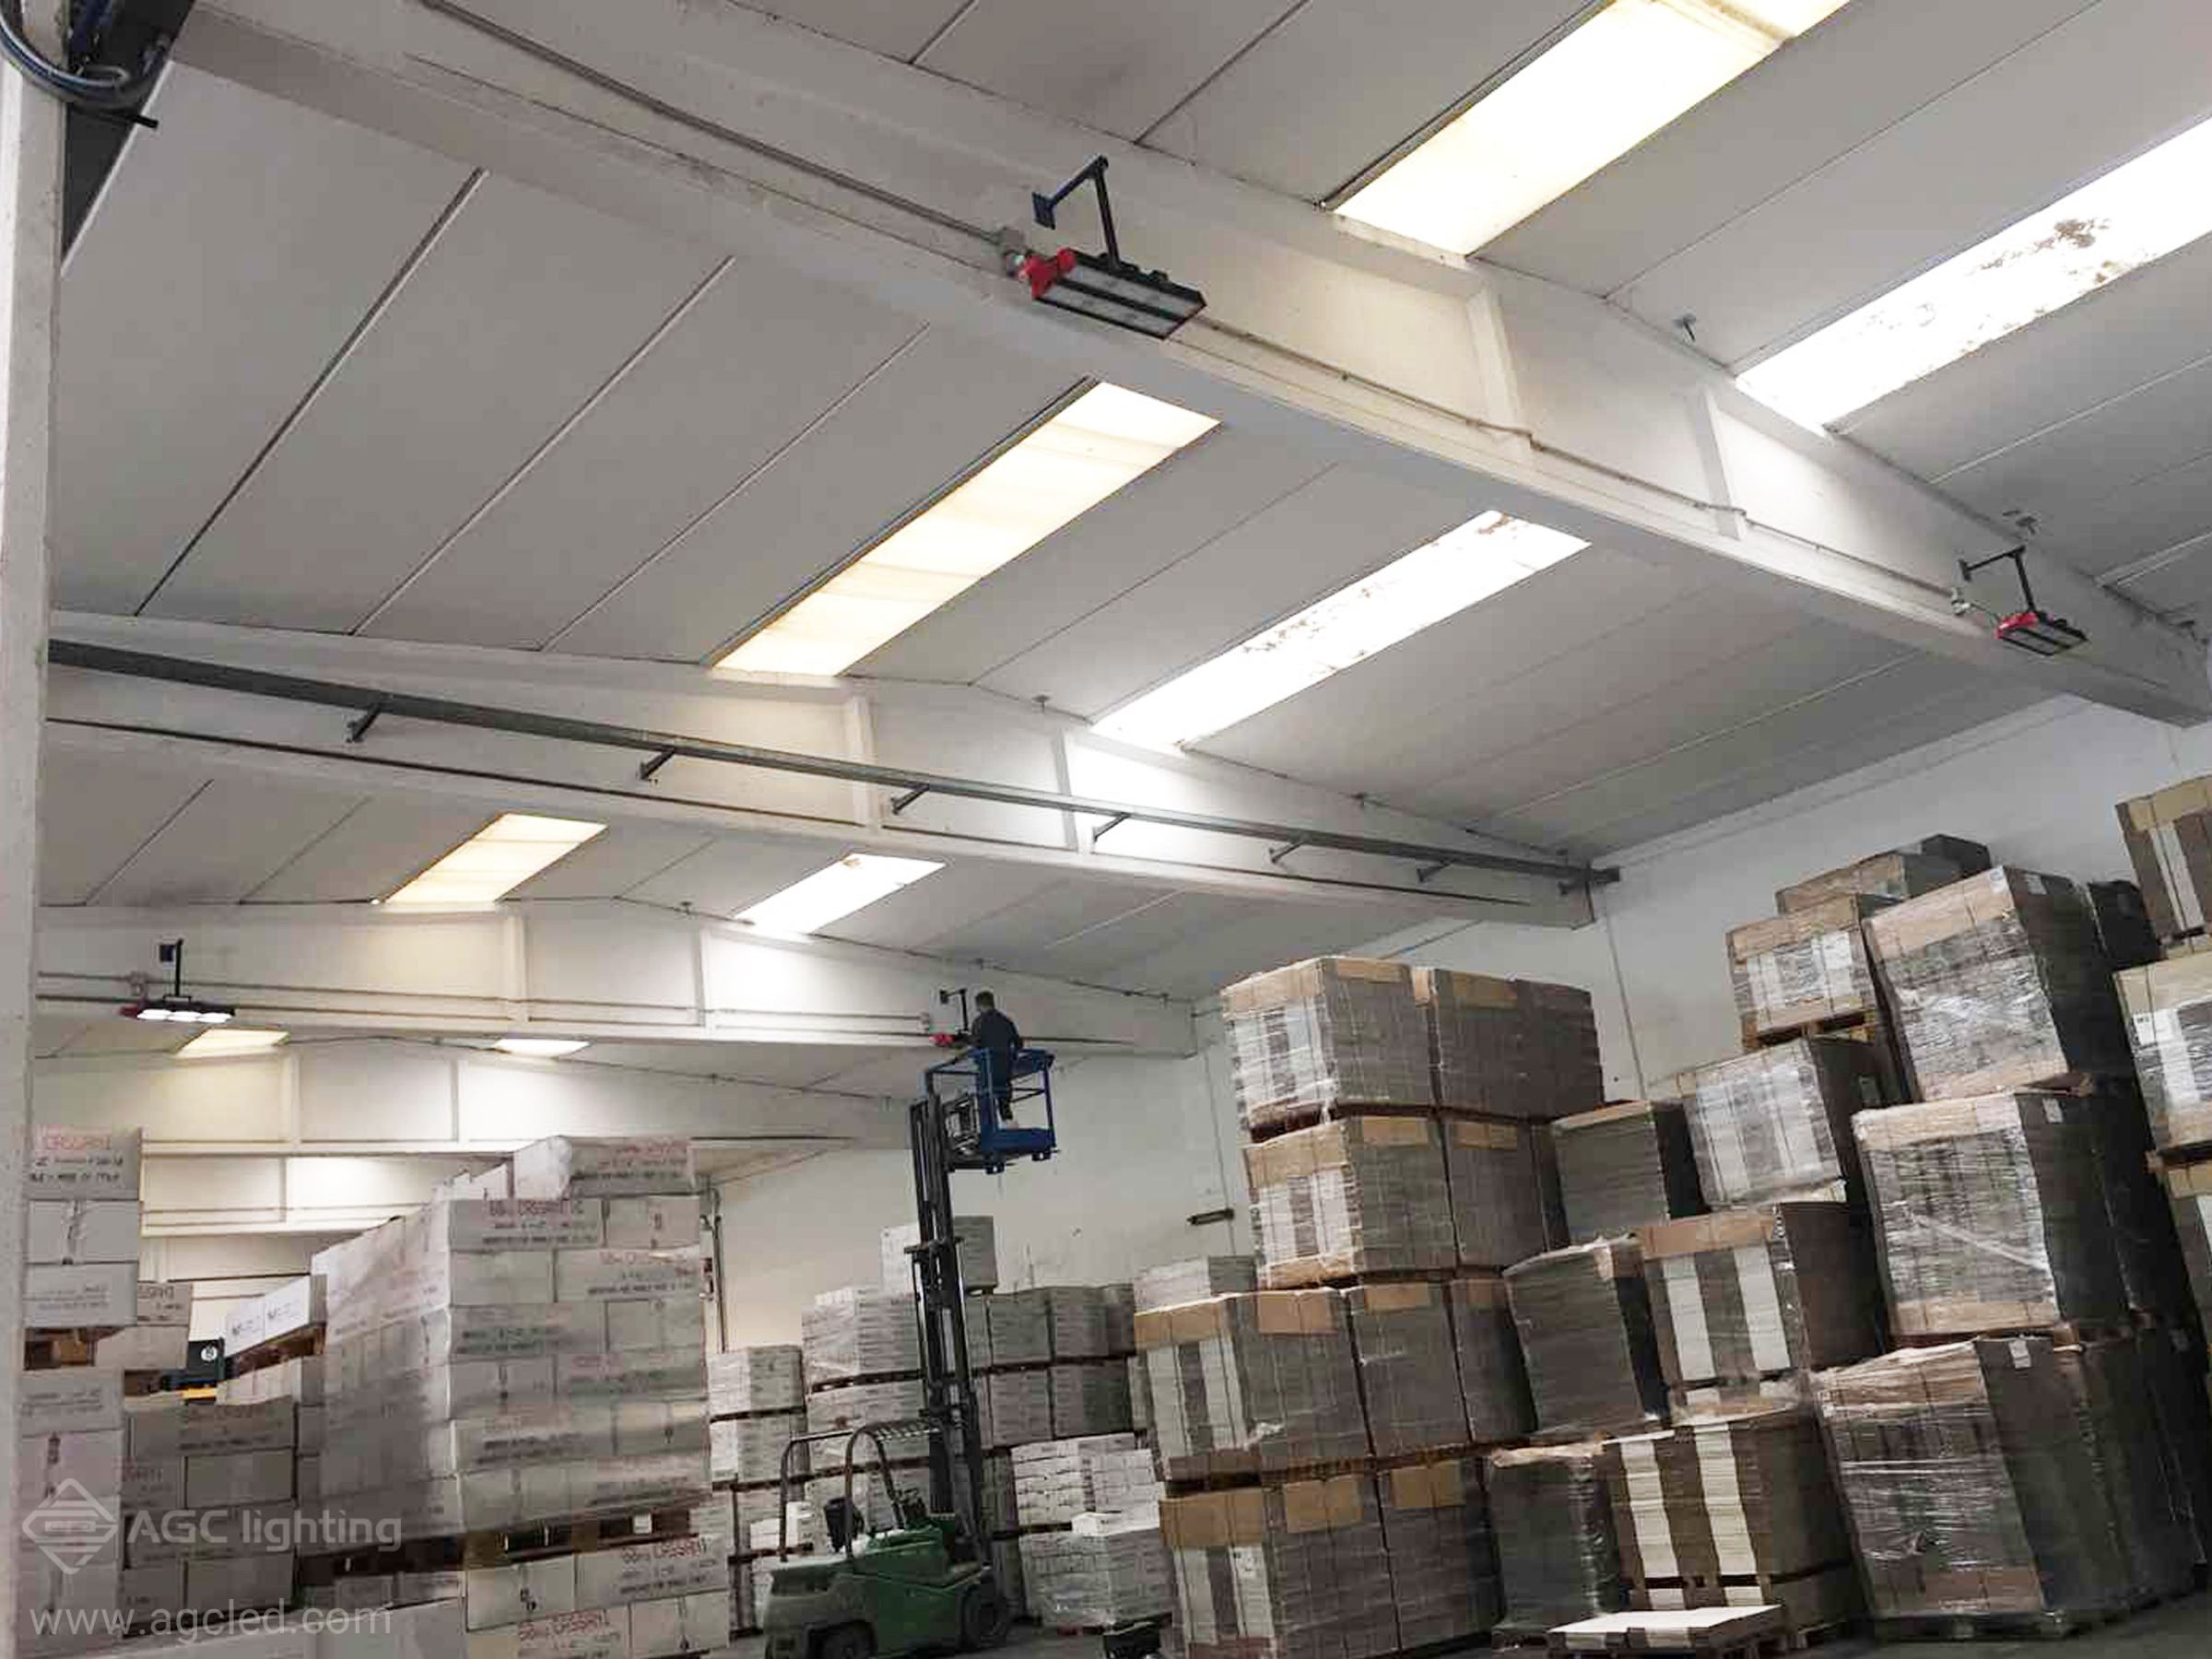 180W Linear Light in Warehouse Lighting Project